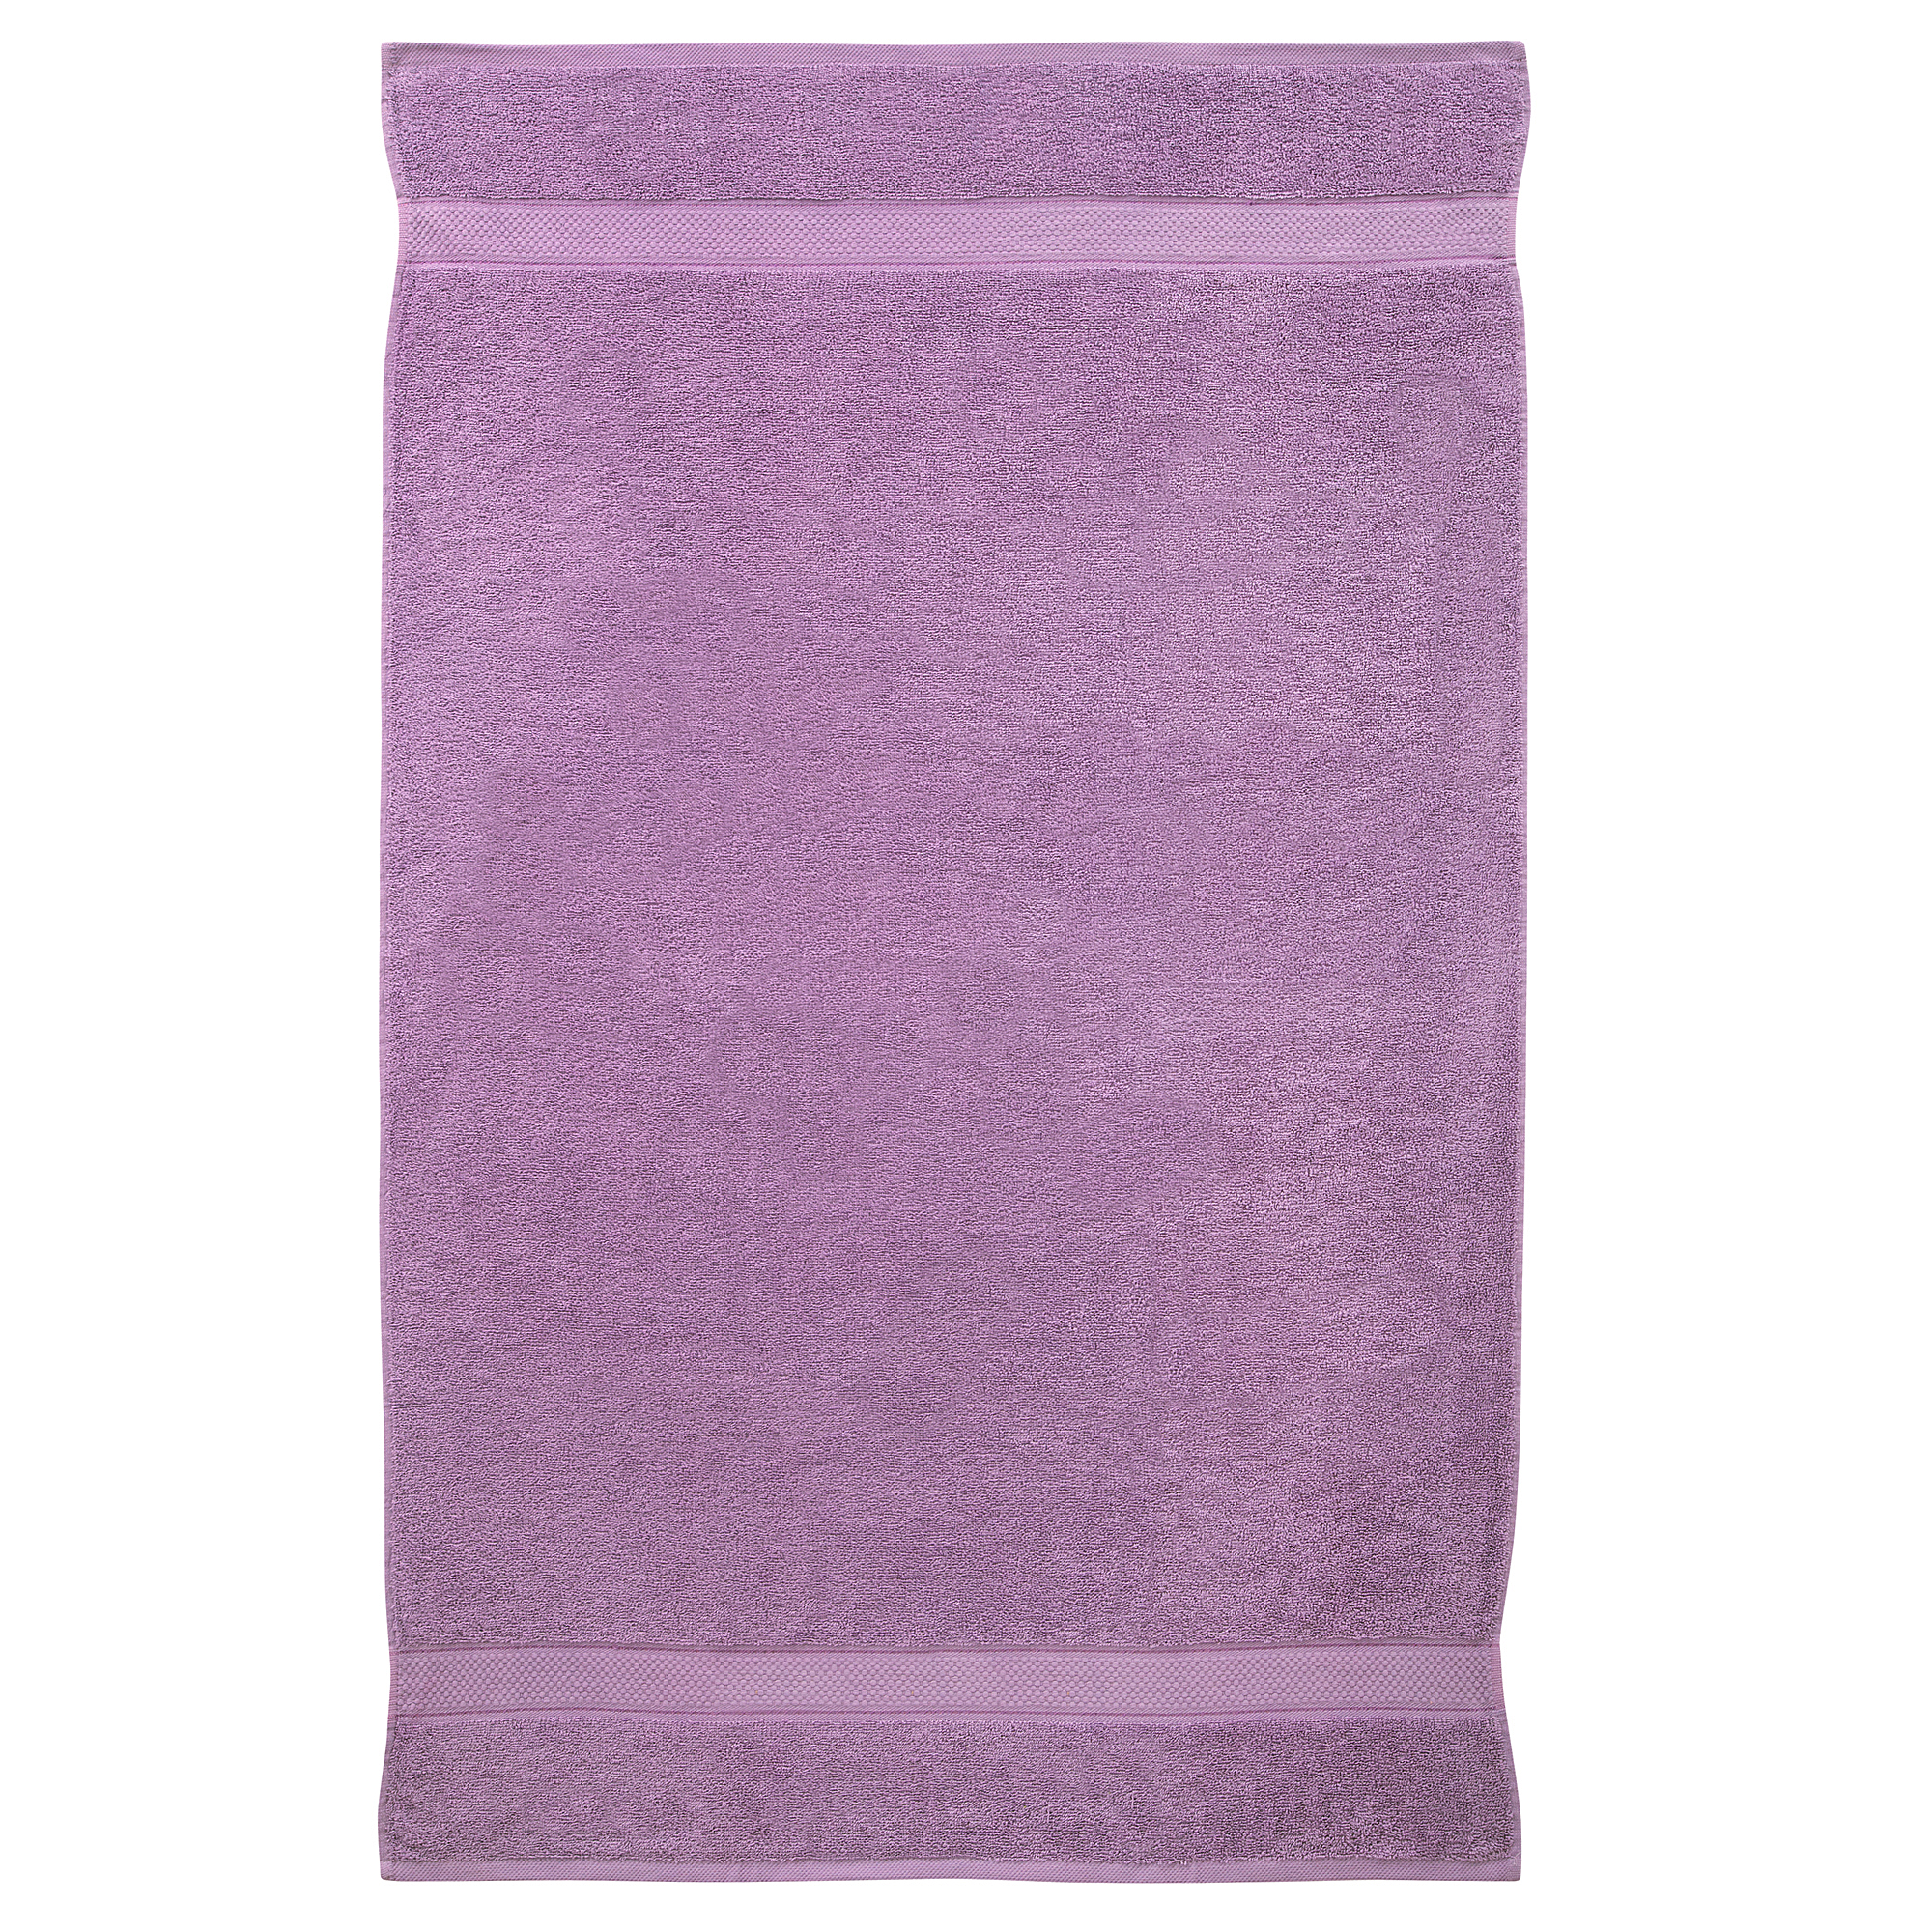 2 Pcs 100 % Cotton Premium Bath Sheet Towel Bale Set Lilac Plain